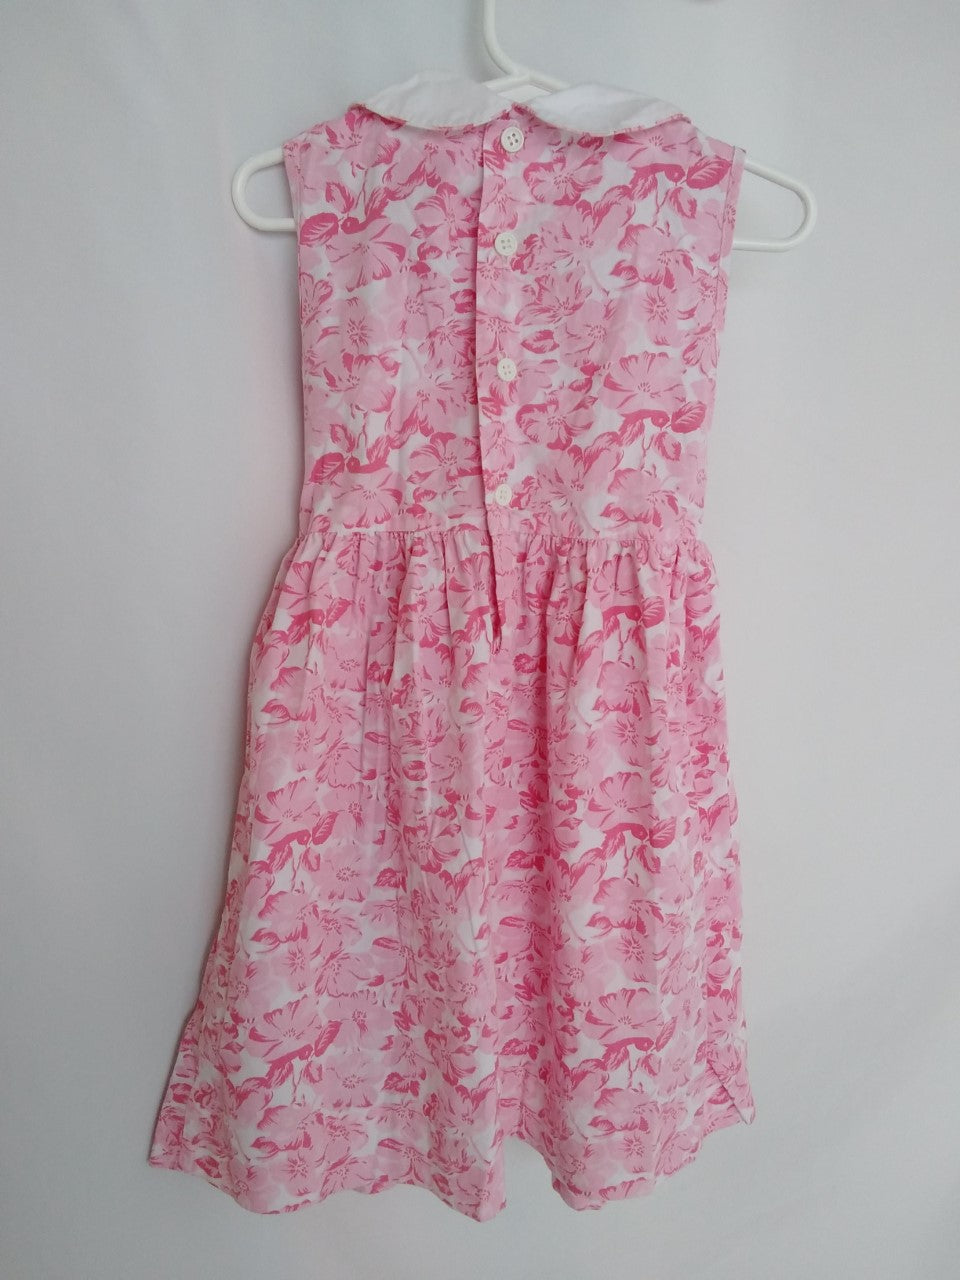 Vintage Sophie Dess Pink and White Sleeveless Seersucker Dress - 3yr